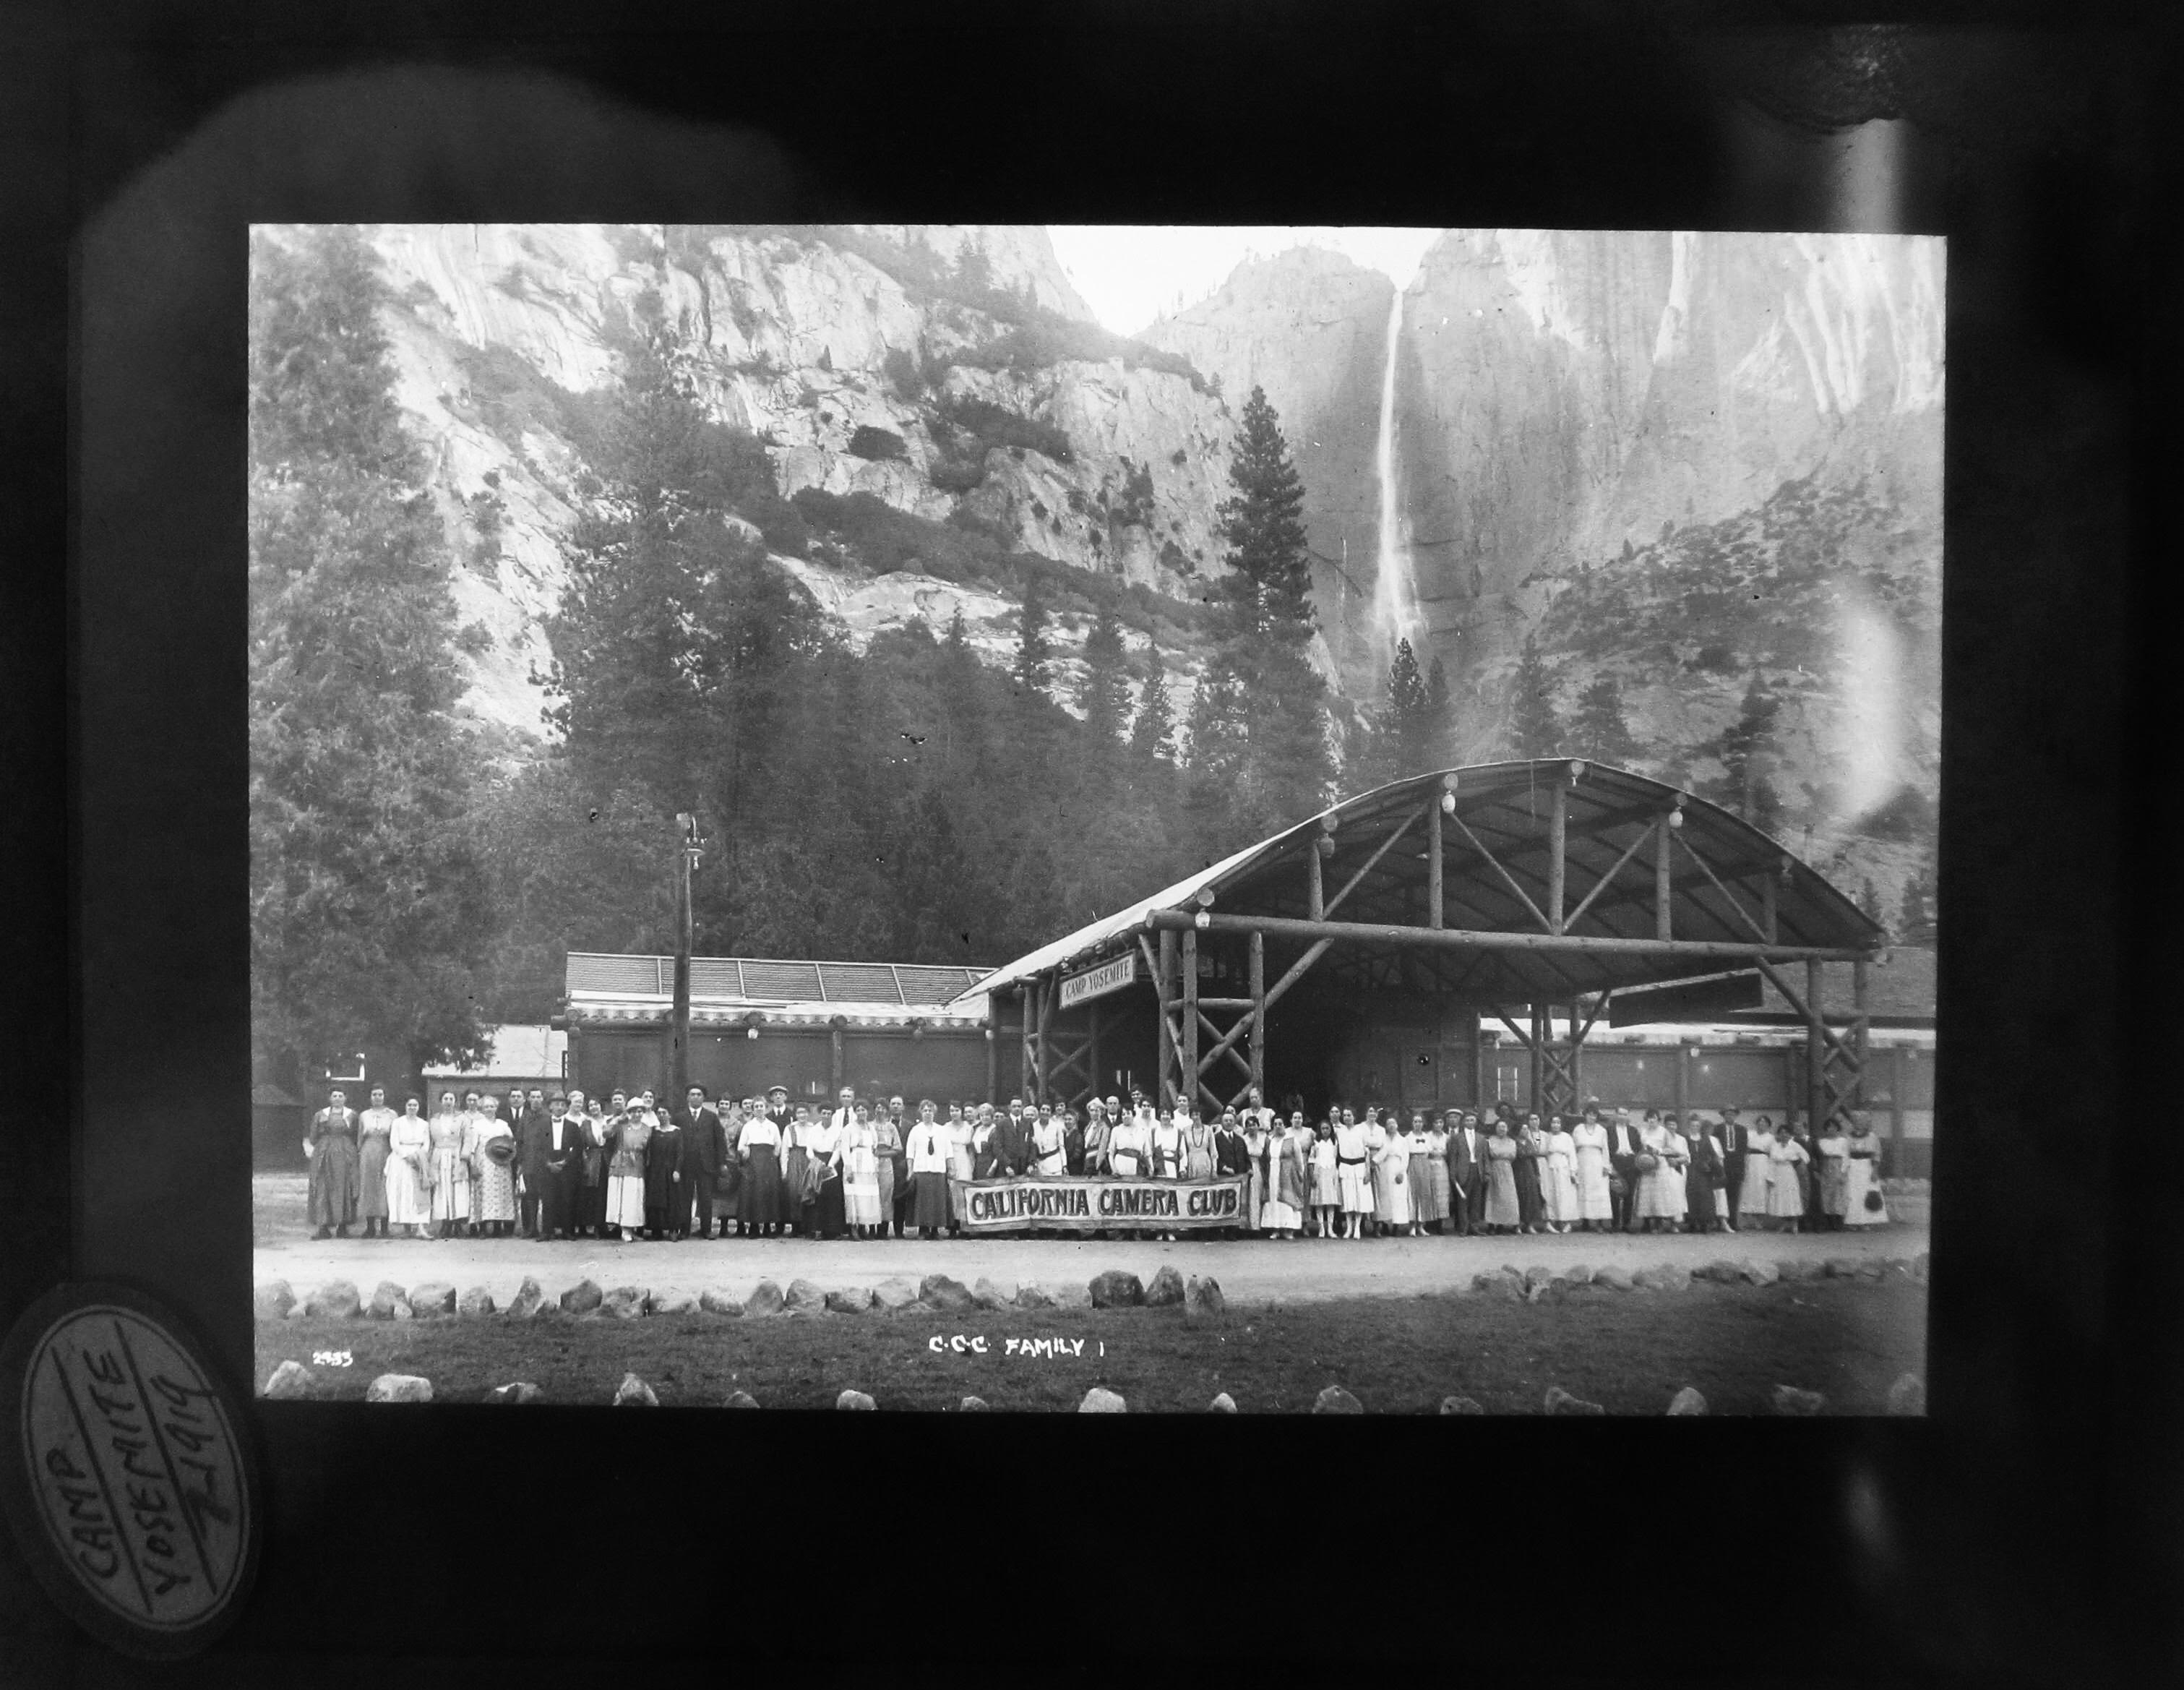 [California Camera Club at Yosemite], 1910s, Collection of California Camera Club Lantern Slides, Los Angeles Public Library.